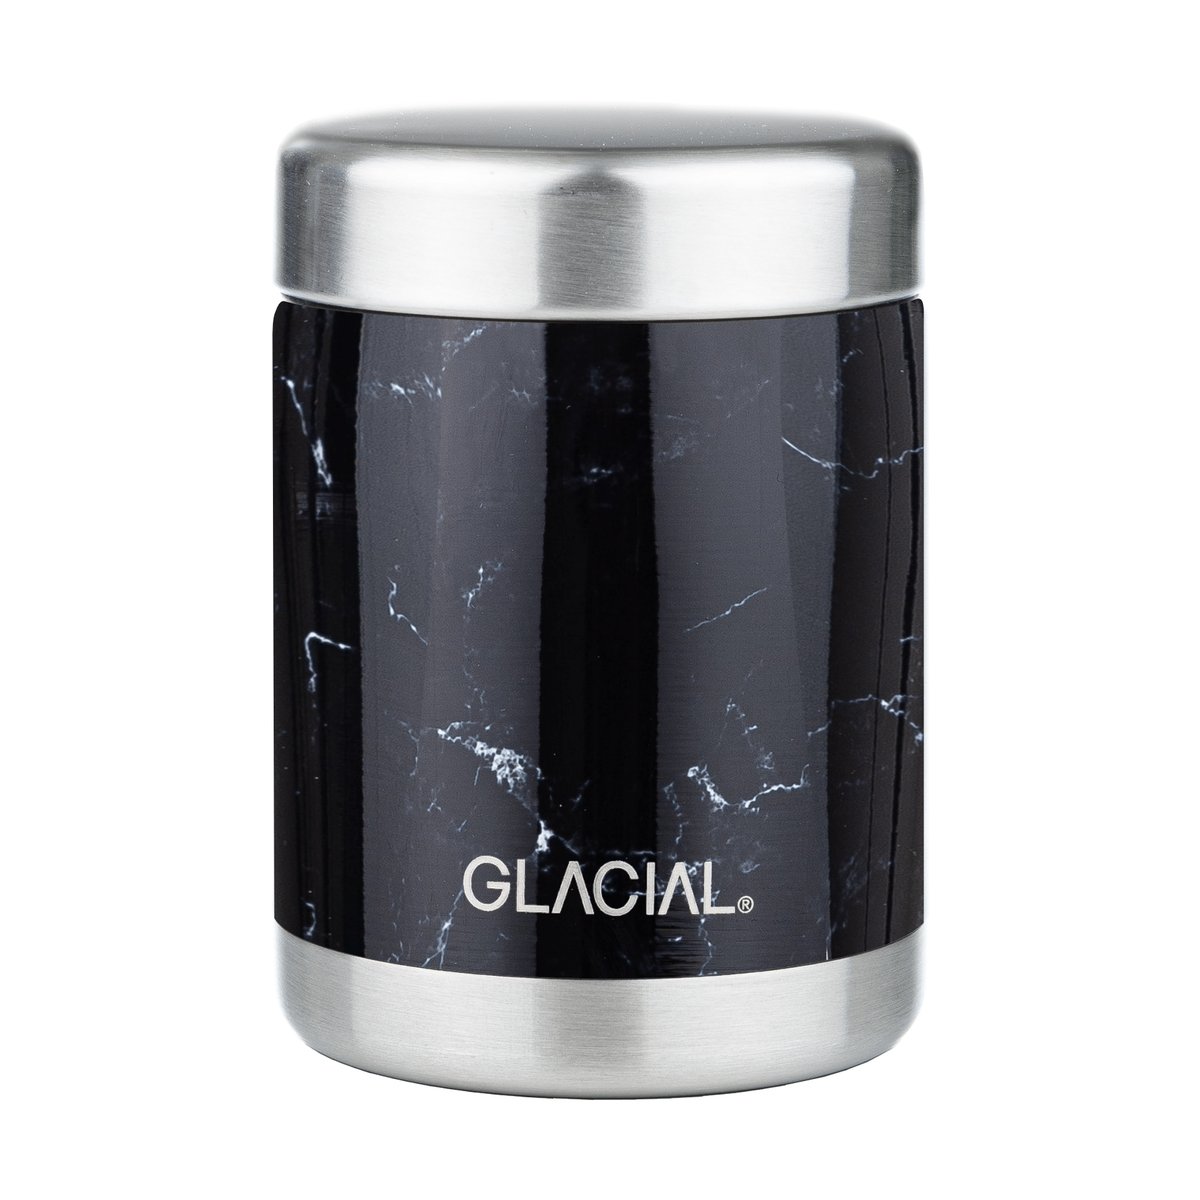 Glacial Glacial mattermos 350 ml Black marble